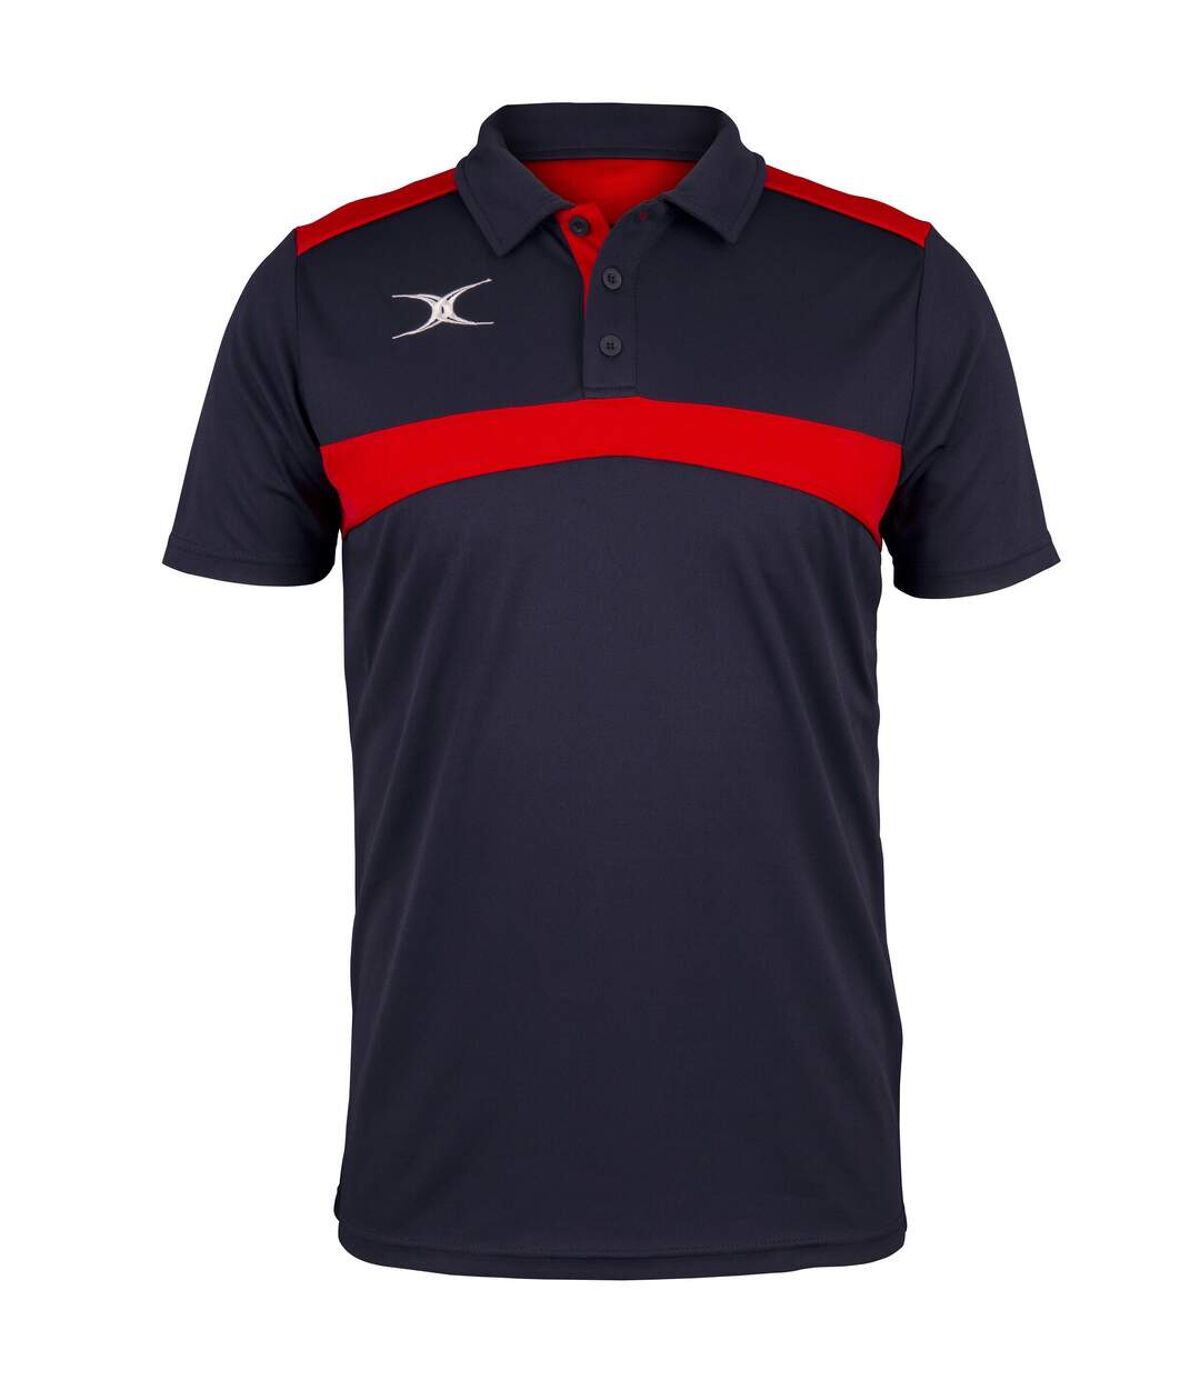 Gilbert Mens Photon Polo Shirt (Dark Navy/Red) - UTRW6630